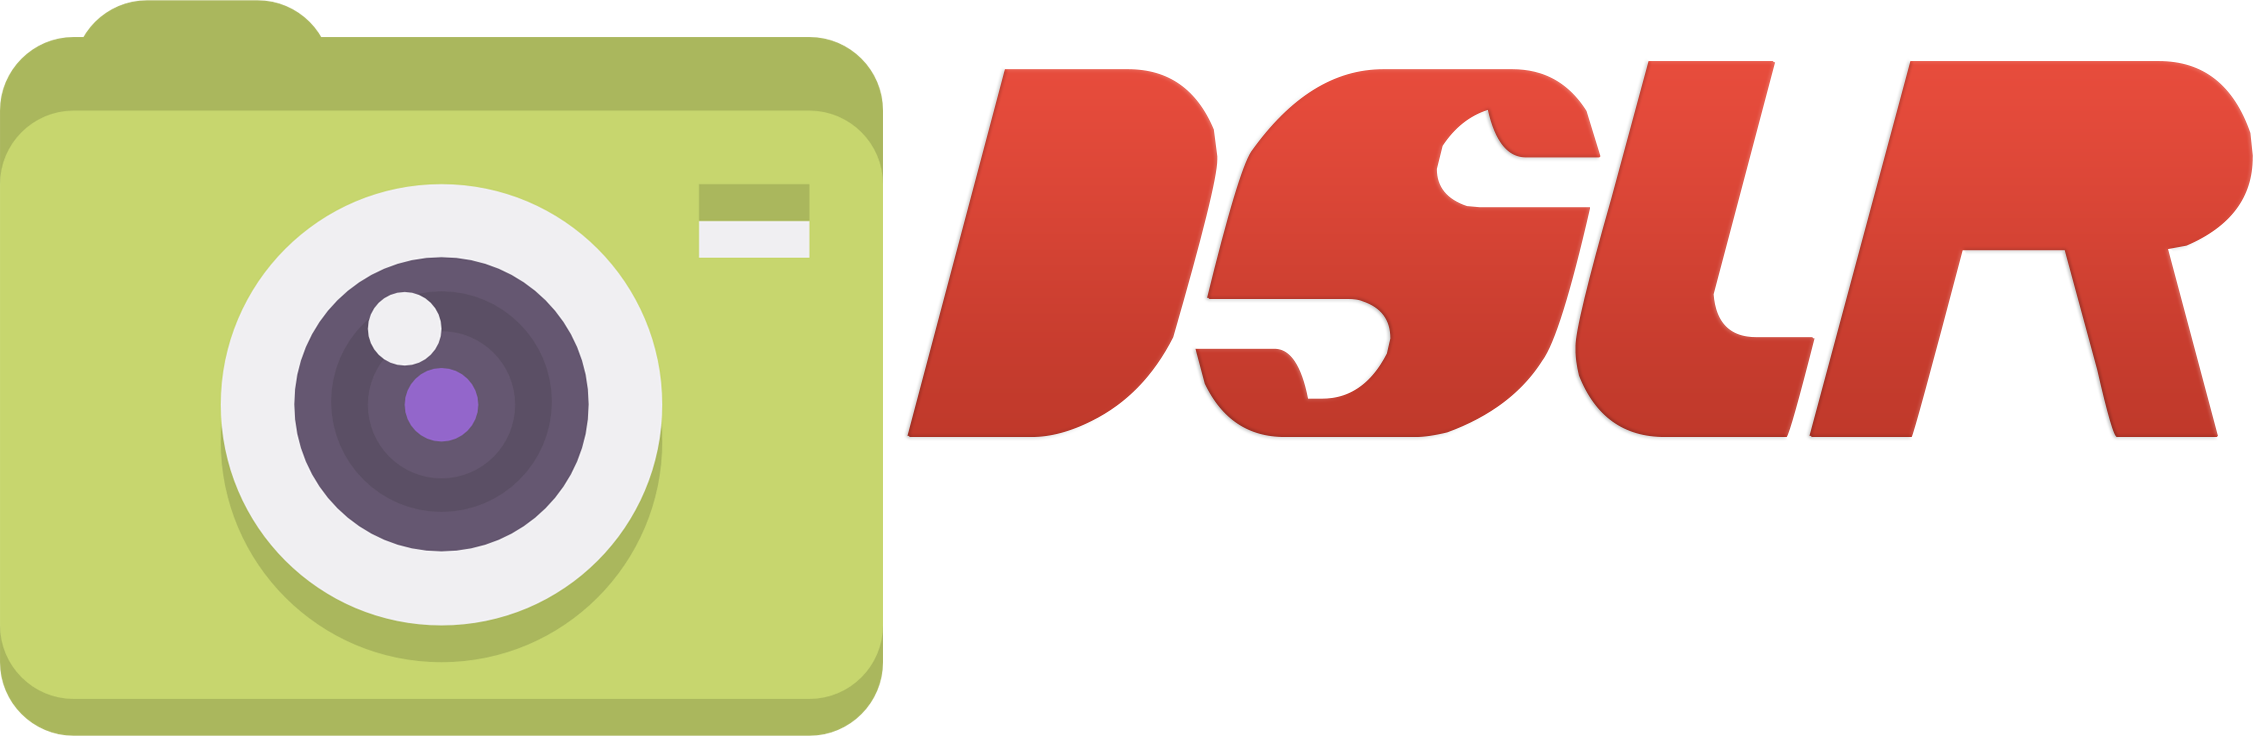 Dslr Camera Pros - Digital Slr (2267x736)